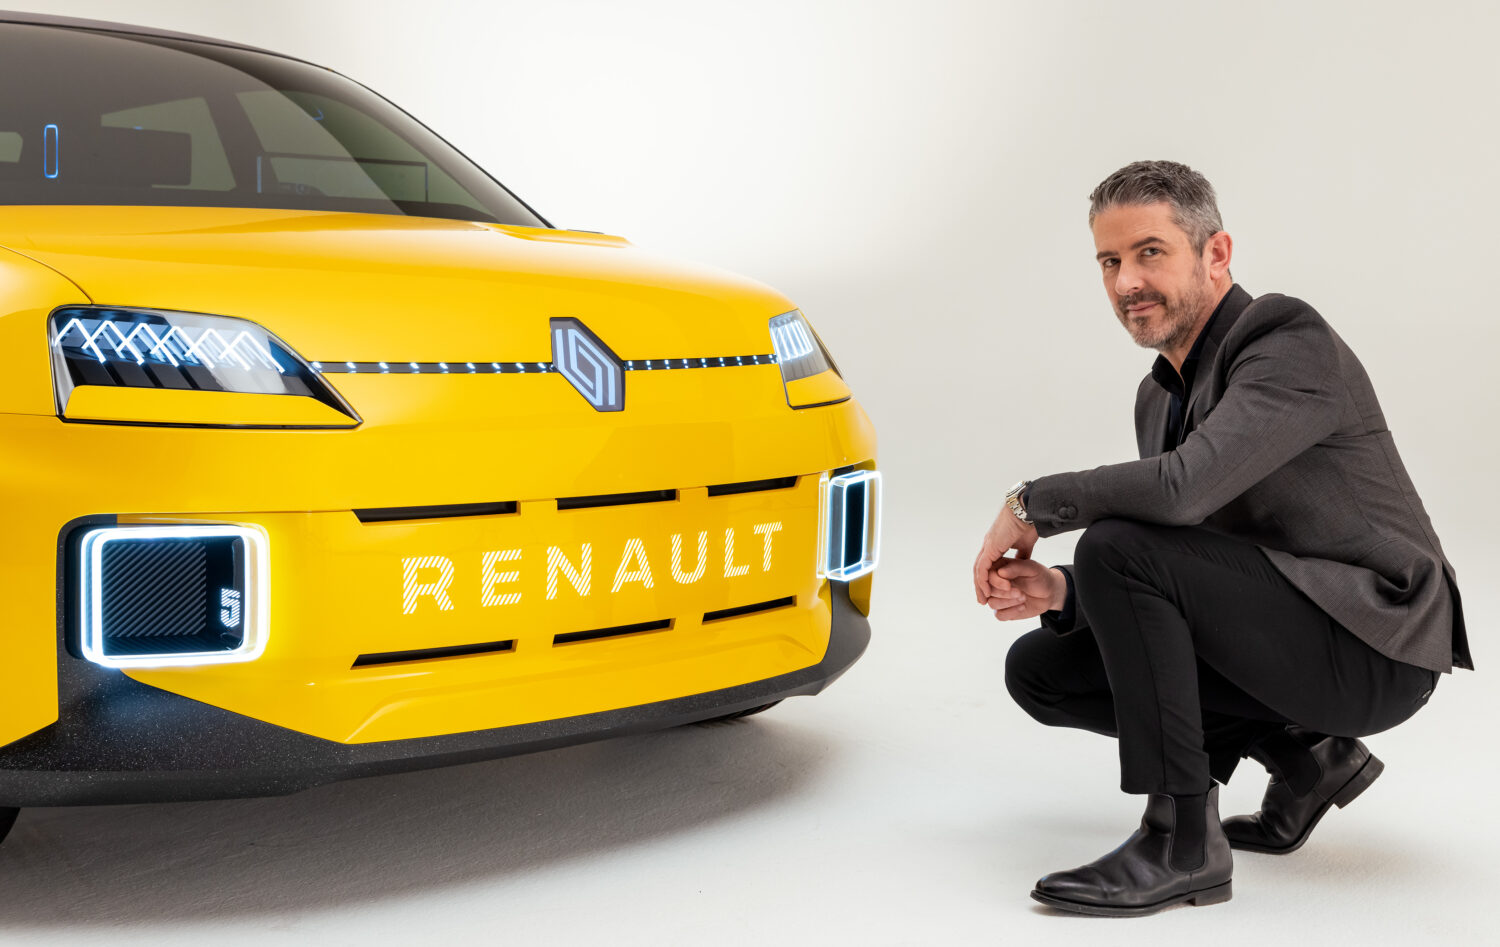 2021 - Renault 5 Prototype et Gilles VIDAL, designer